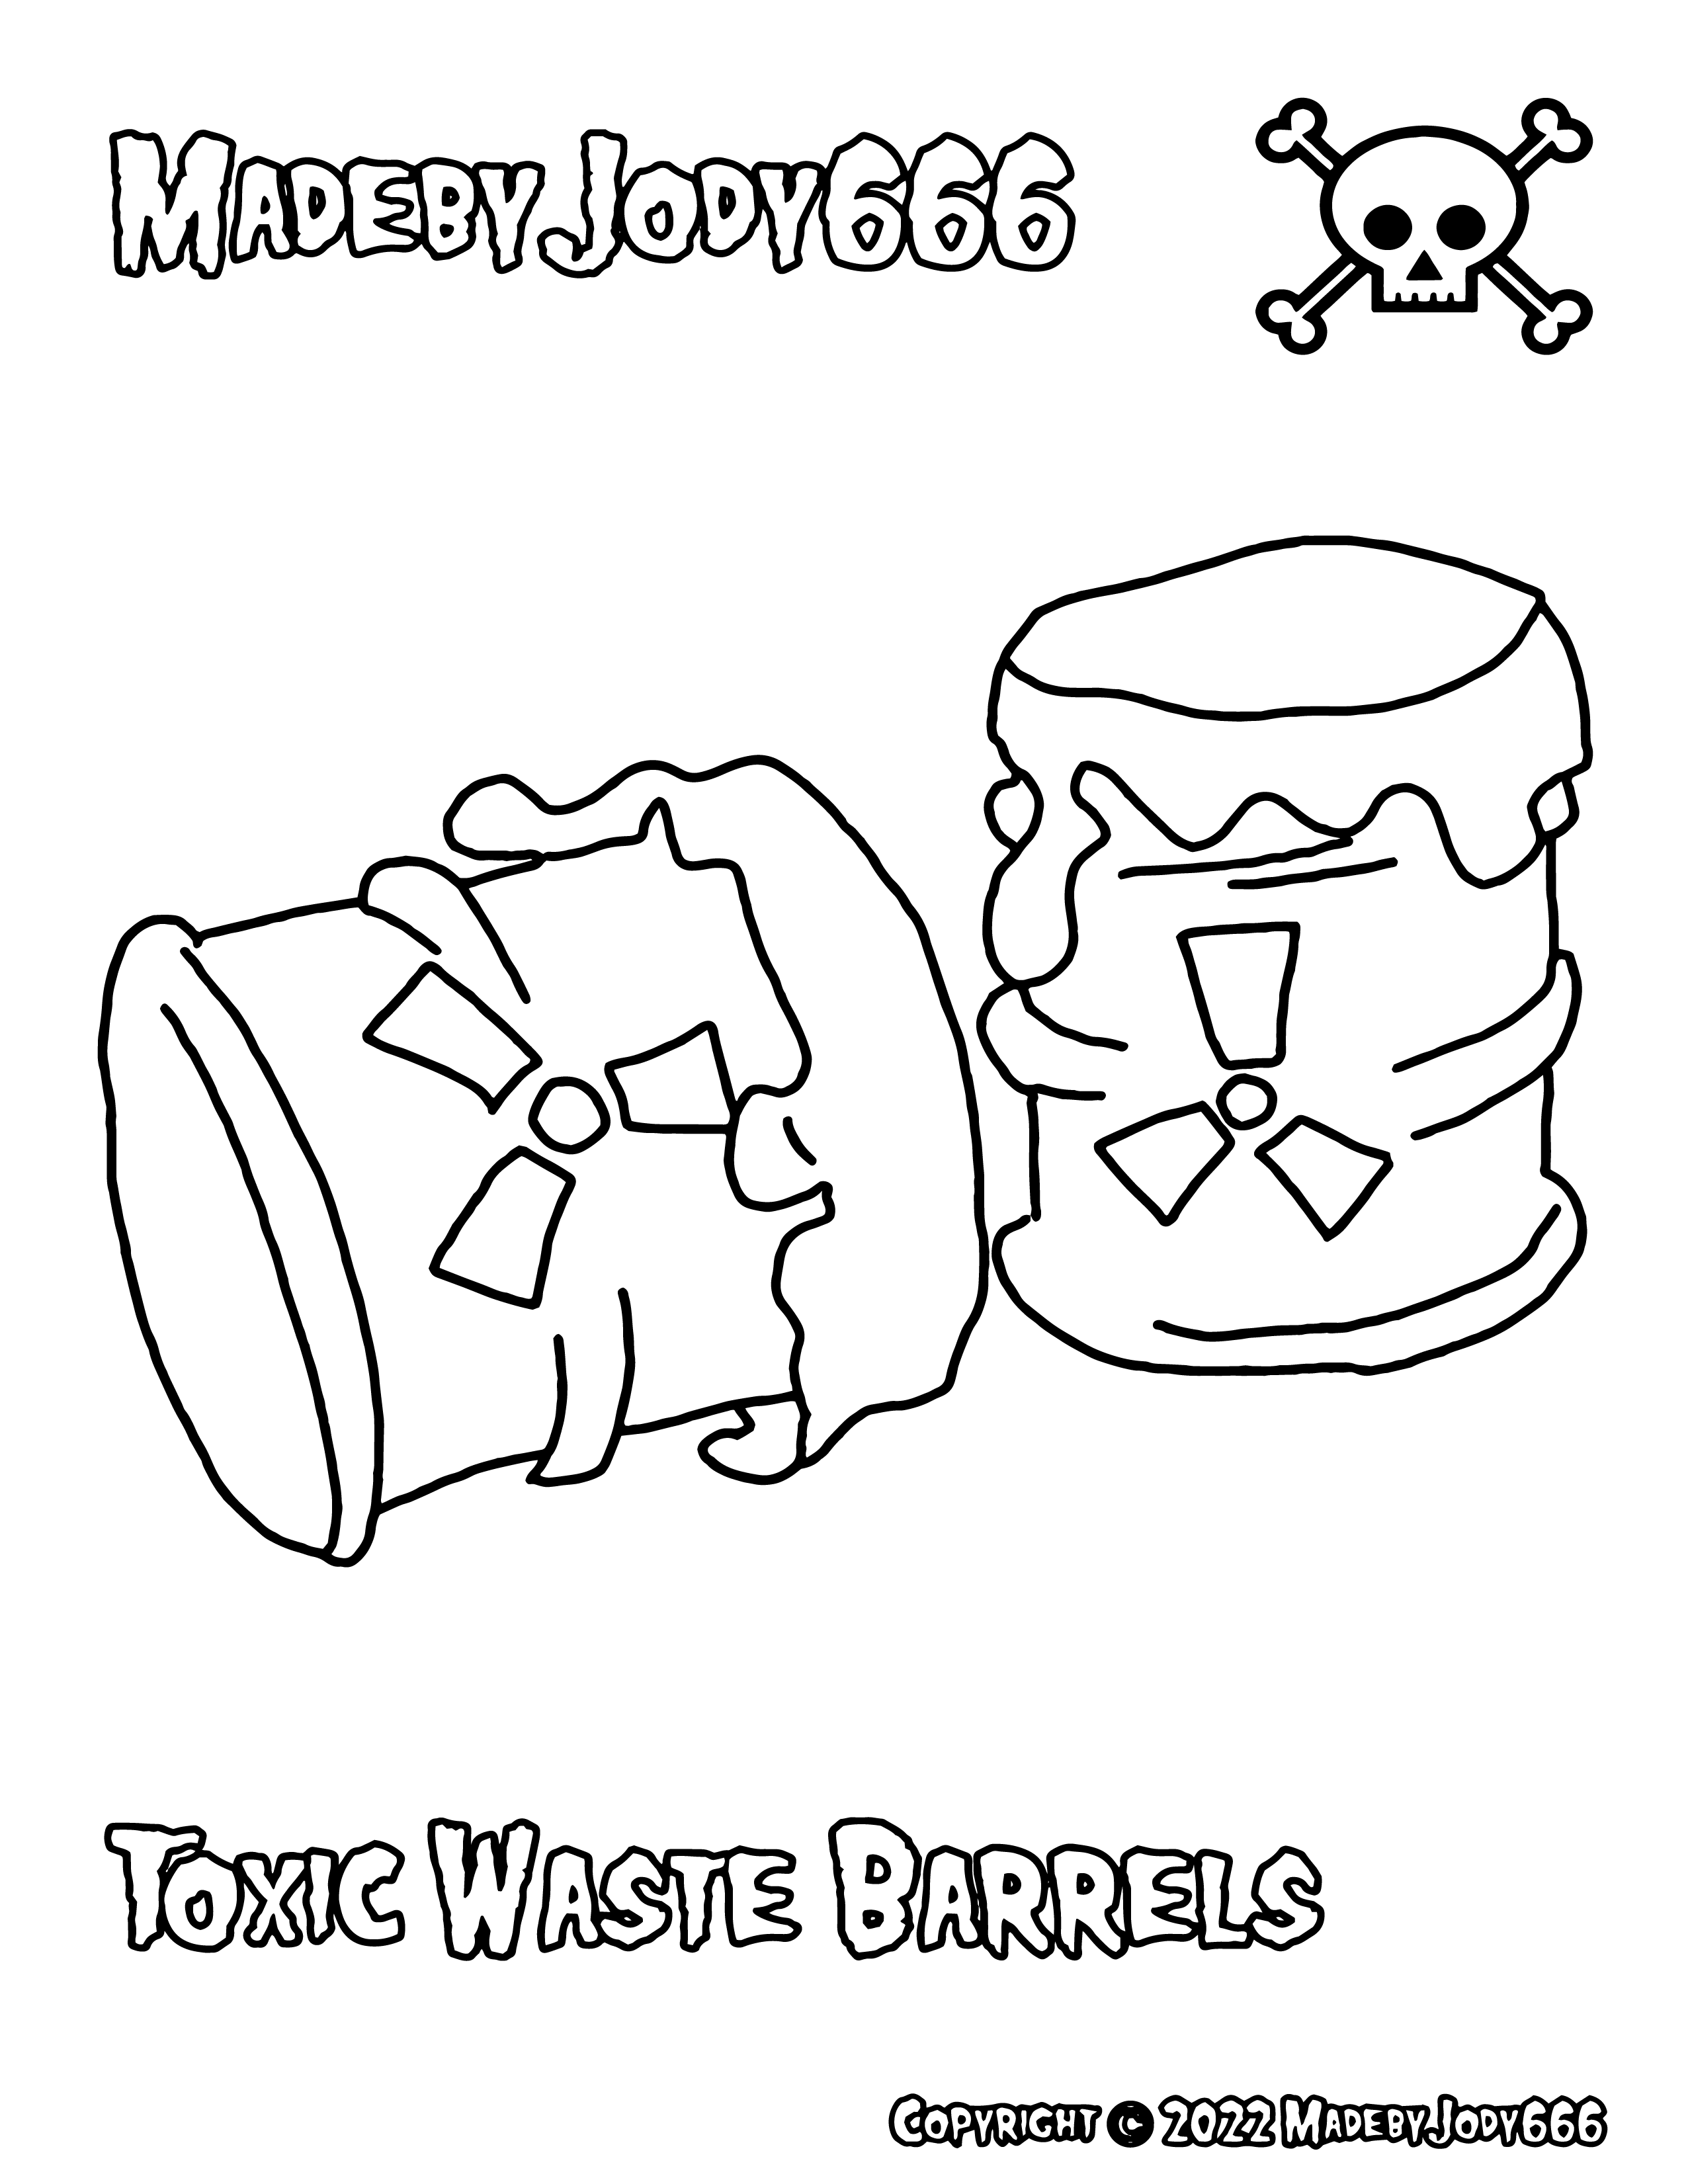 Toxic Waste Barrels - Crochet the weird by MadebyJody666